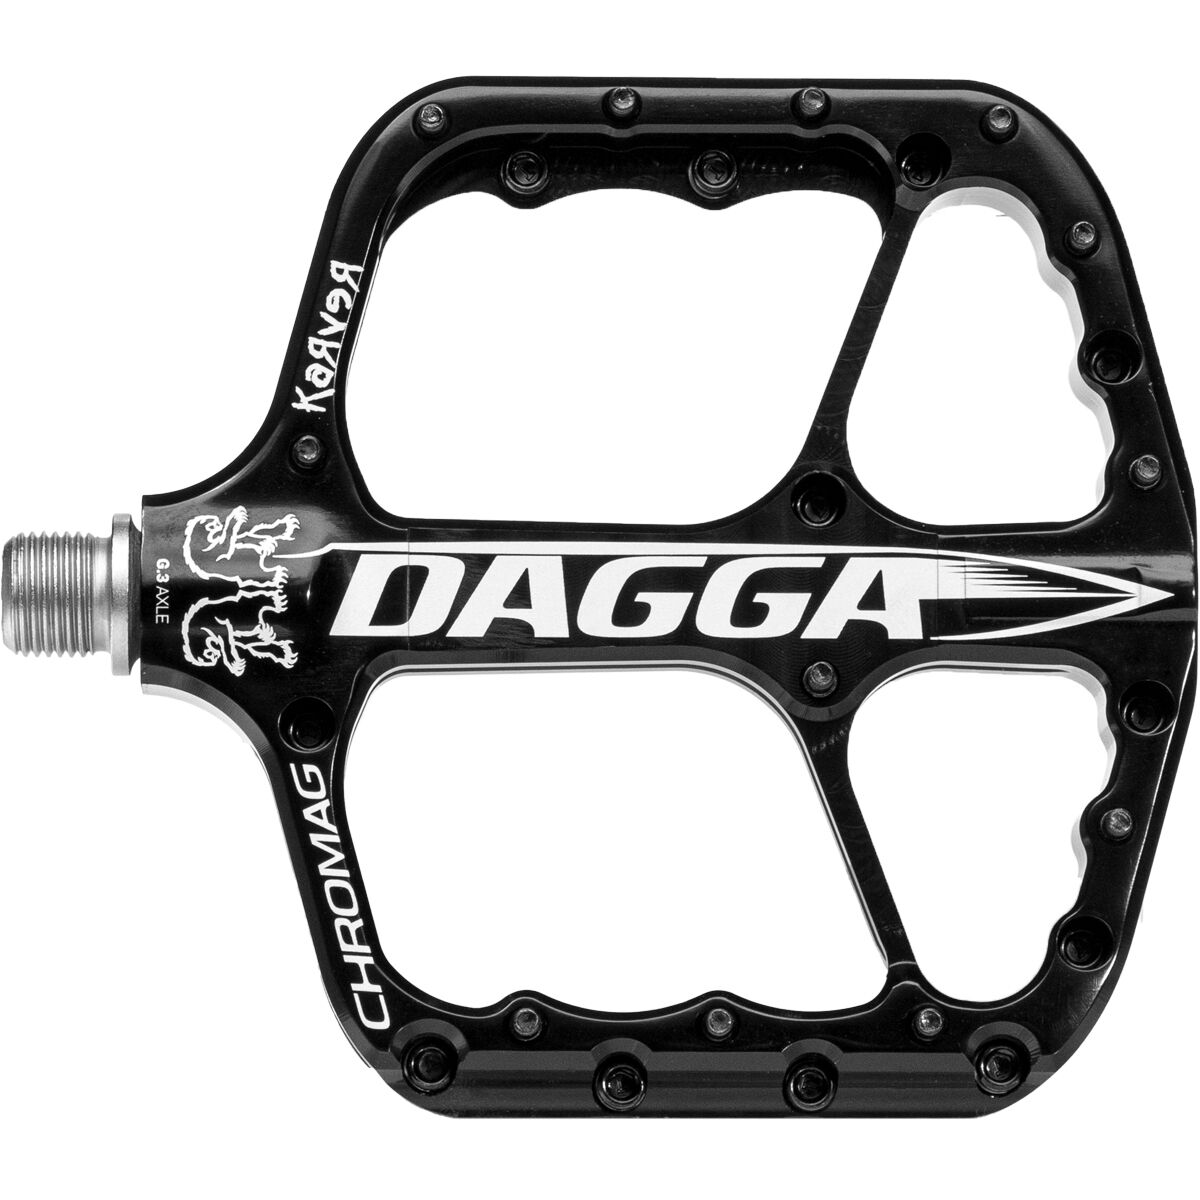 Chromag Dagga Pedals - Components